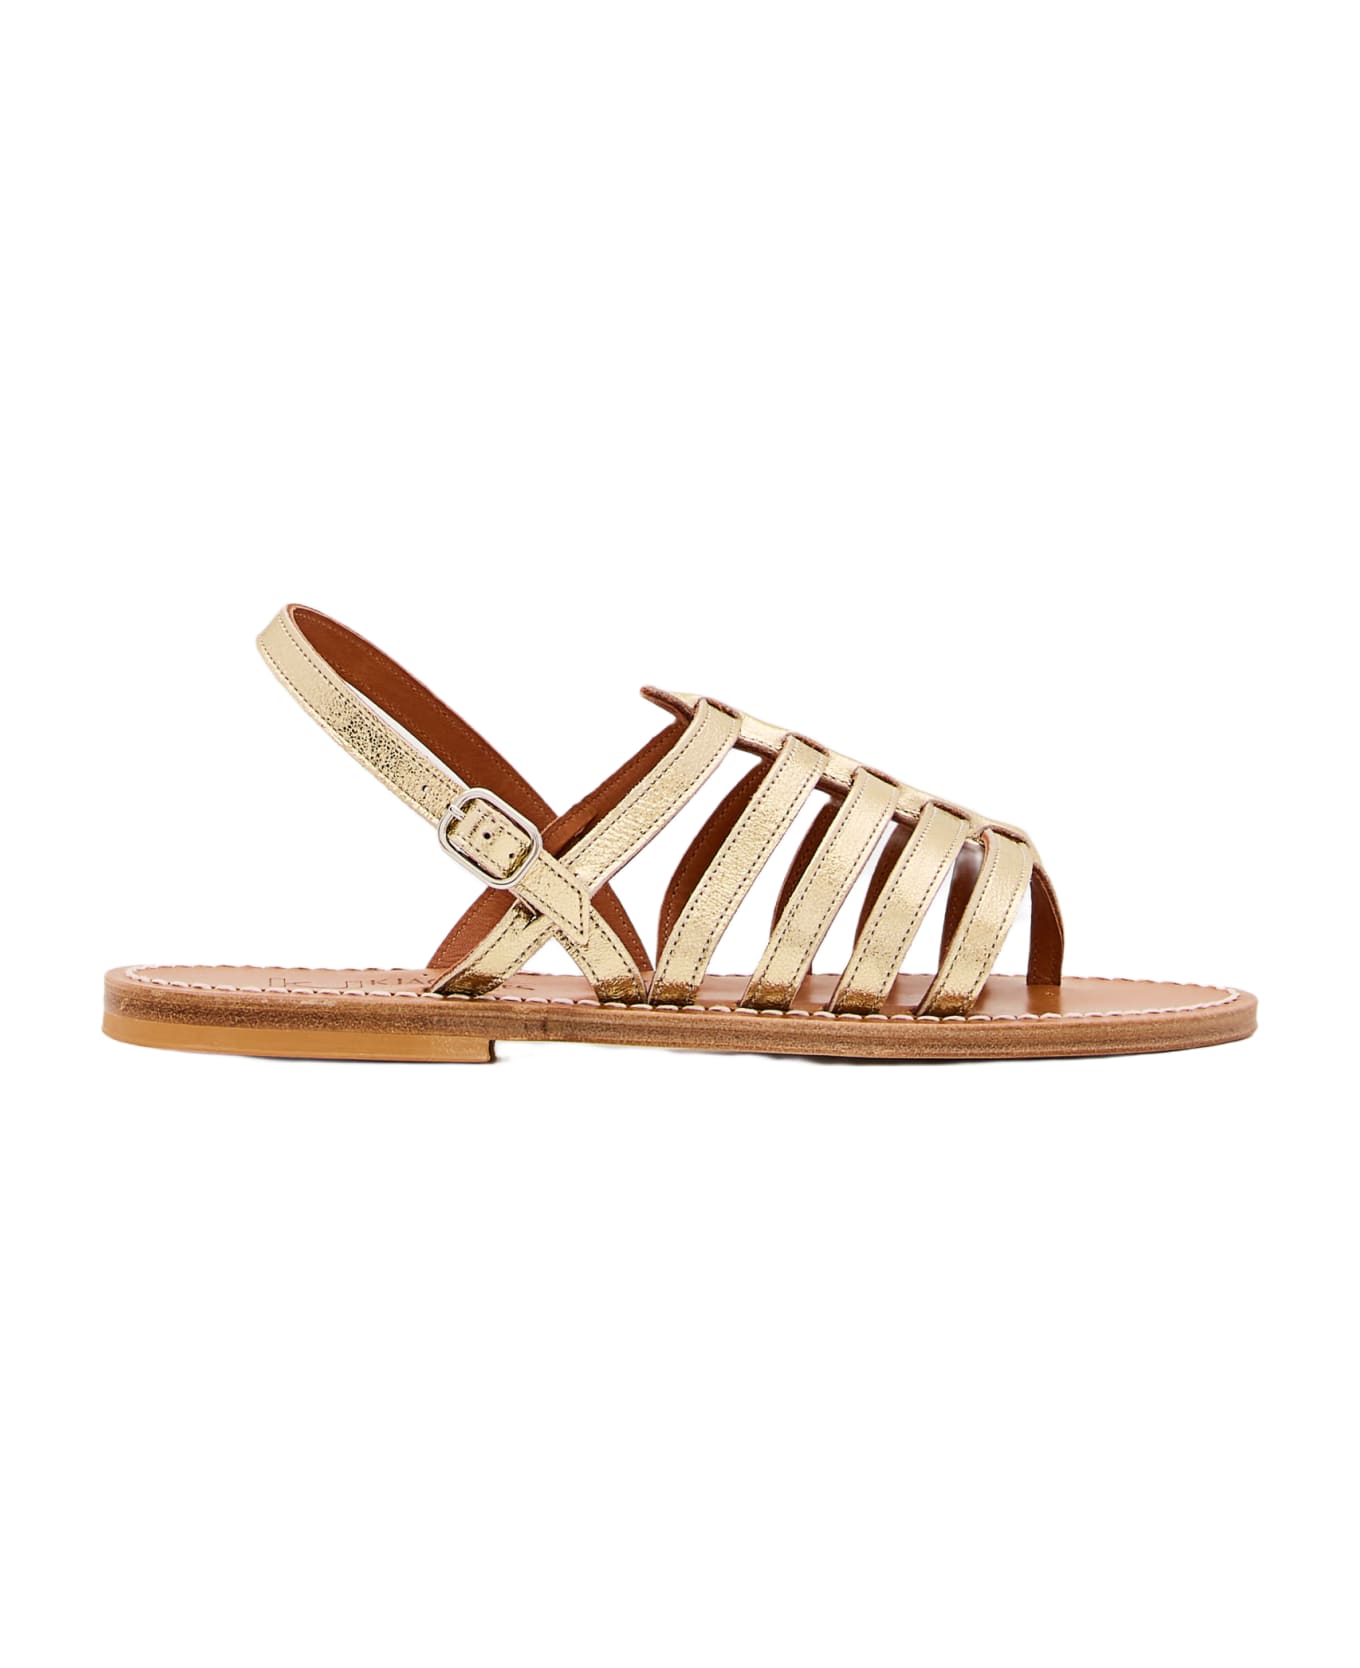 K.Jacques Homere Leather Sandals - Golden